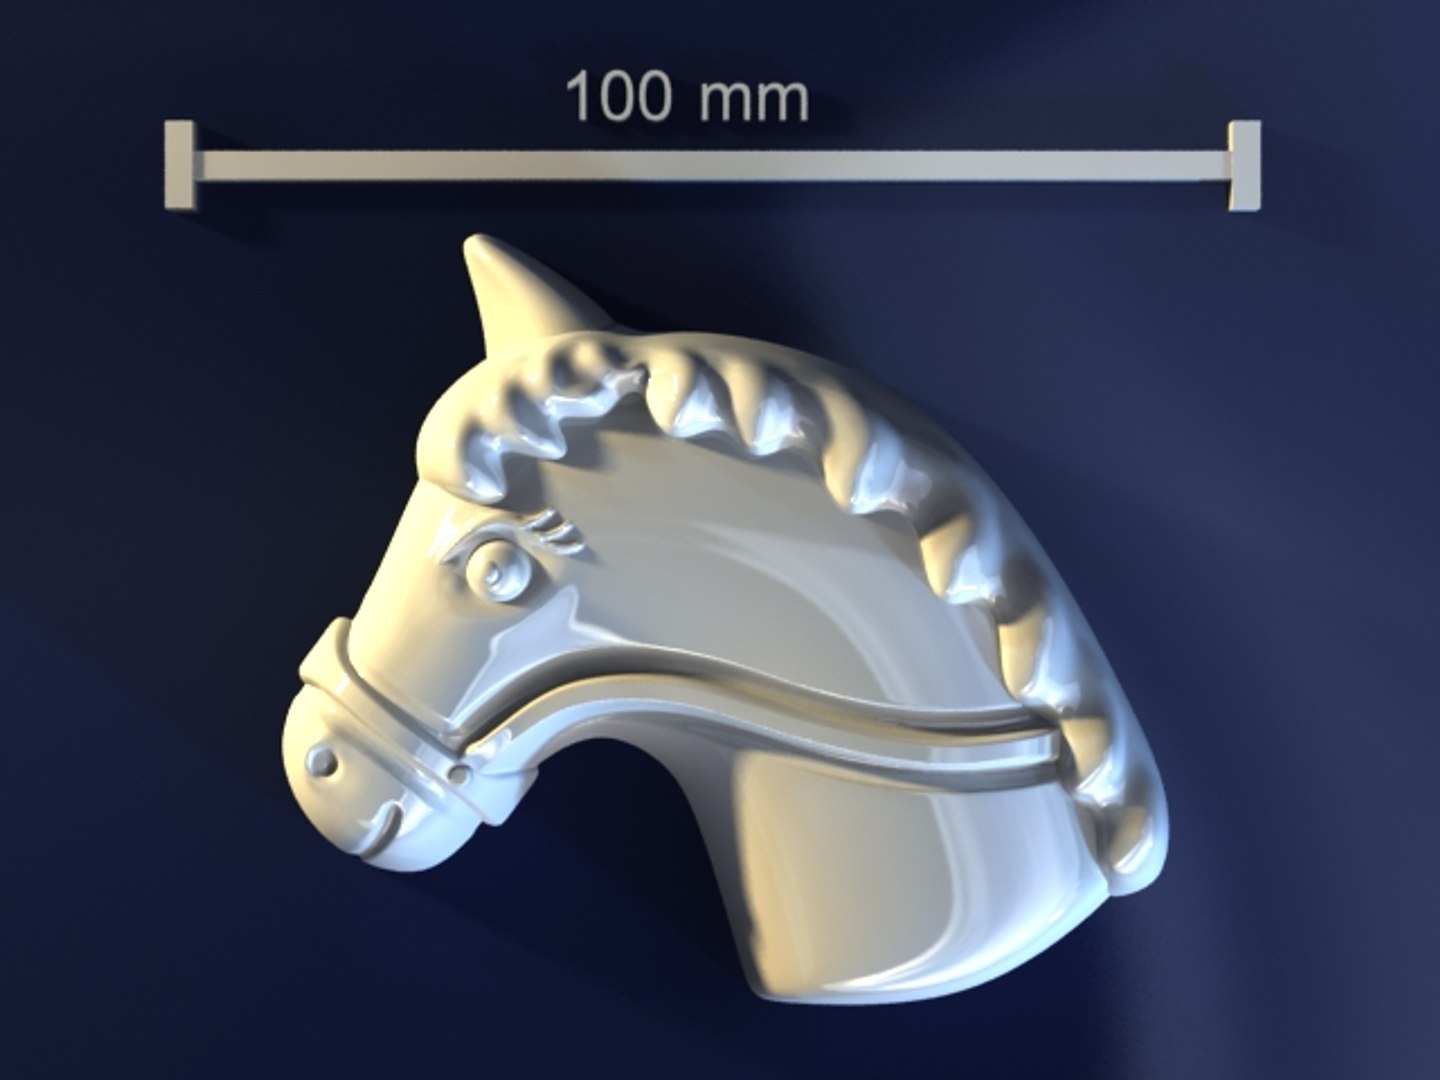 3d horse mould hand model https://p.turbosquid.com/ts-thumb/cL/HRgguc/idKhO8Hr/horse0000/jpg/1410609749/1920x1080/fit_q87/0f19951dee28ab9649b30bf4d48f0a24b1b009d5/horse0000.jpg